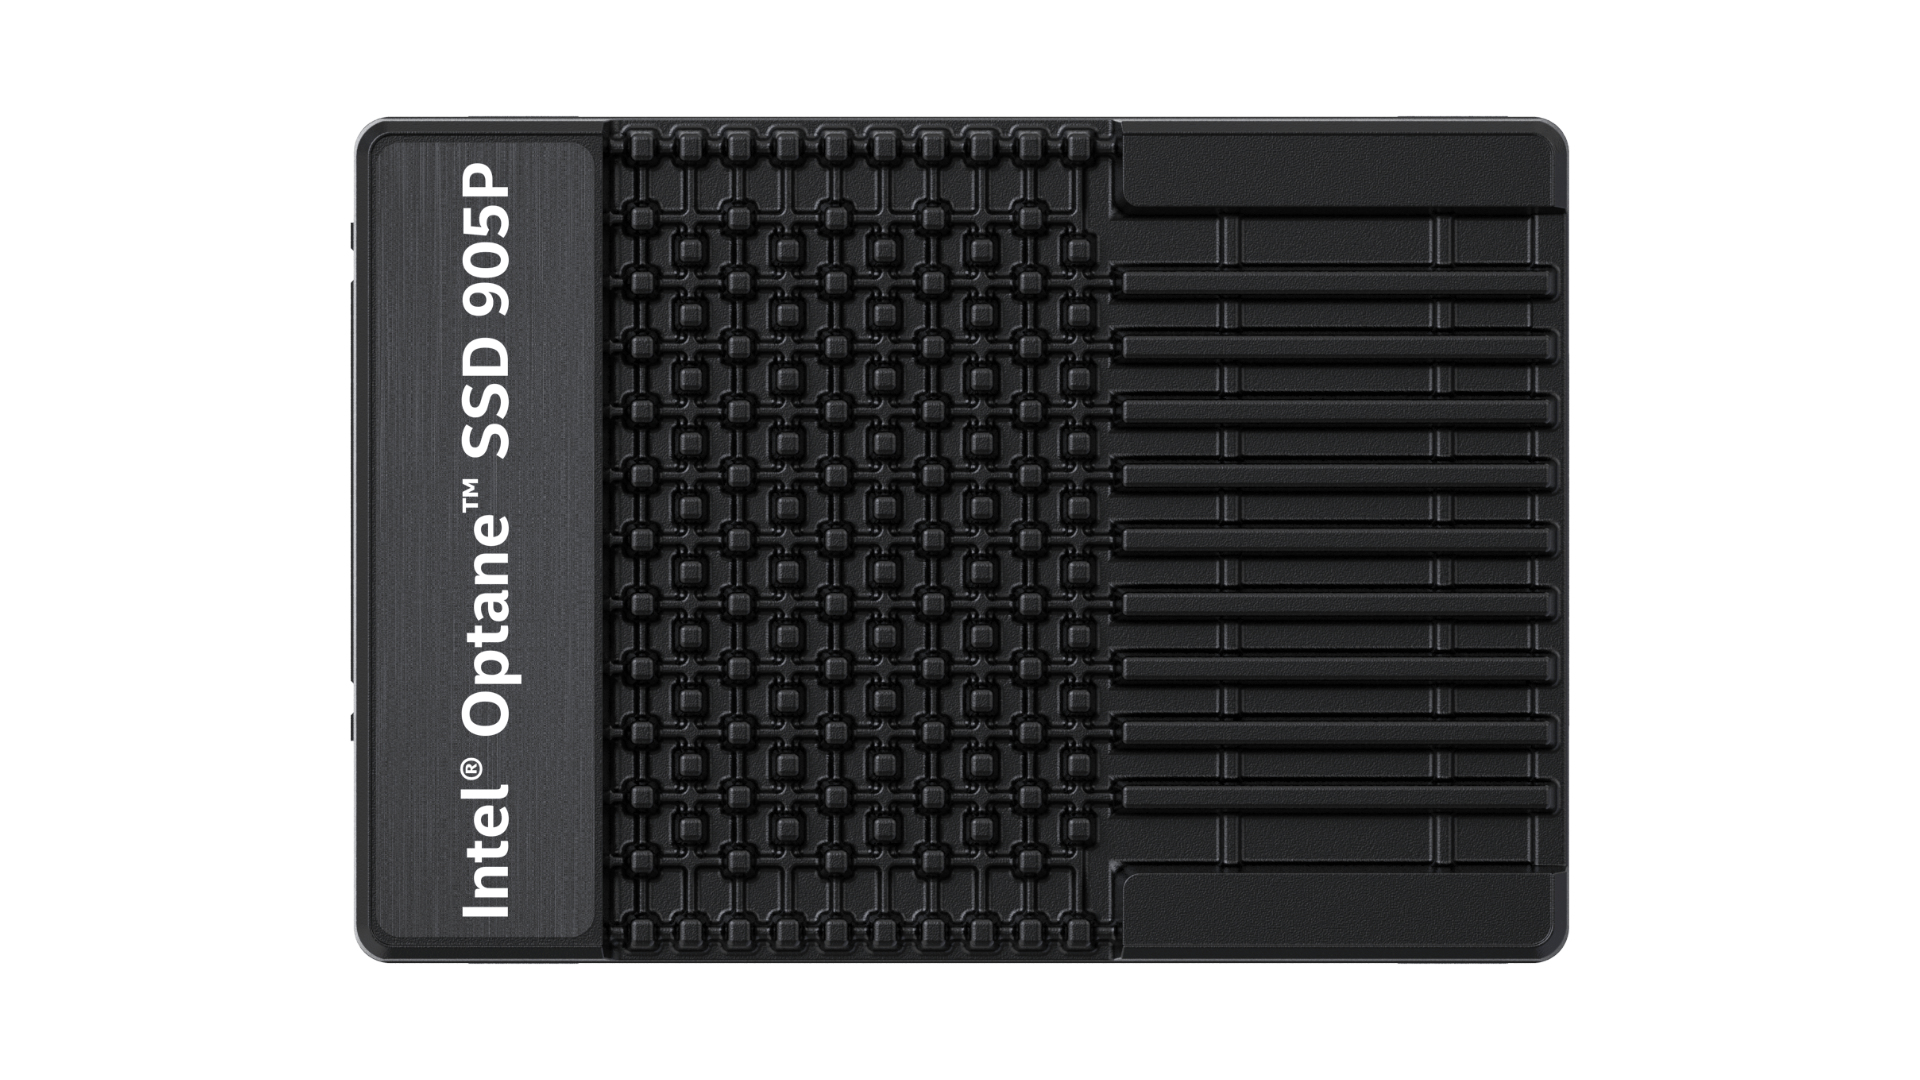 Intel Optane SSD 905P Series - 480 GB SSD - 3D Xpoint (Optane)